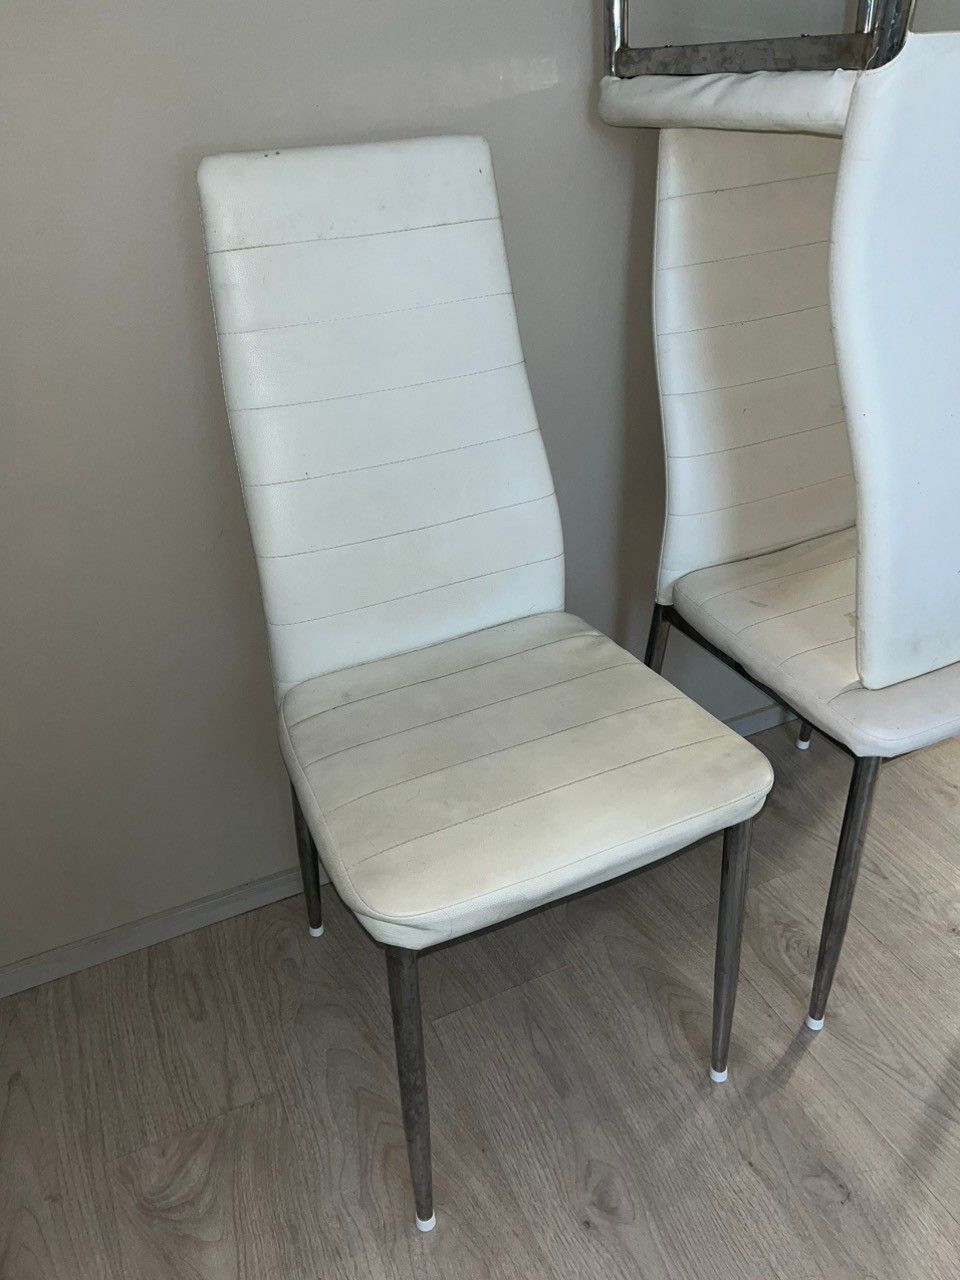 4kpl tuolit